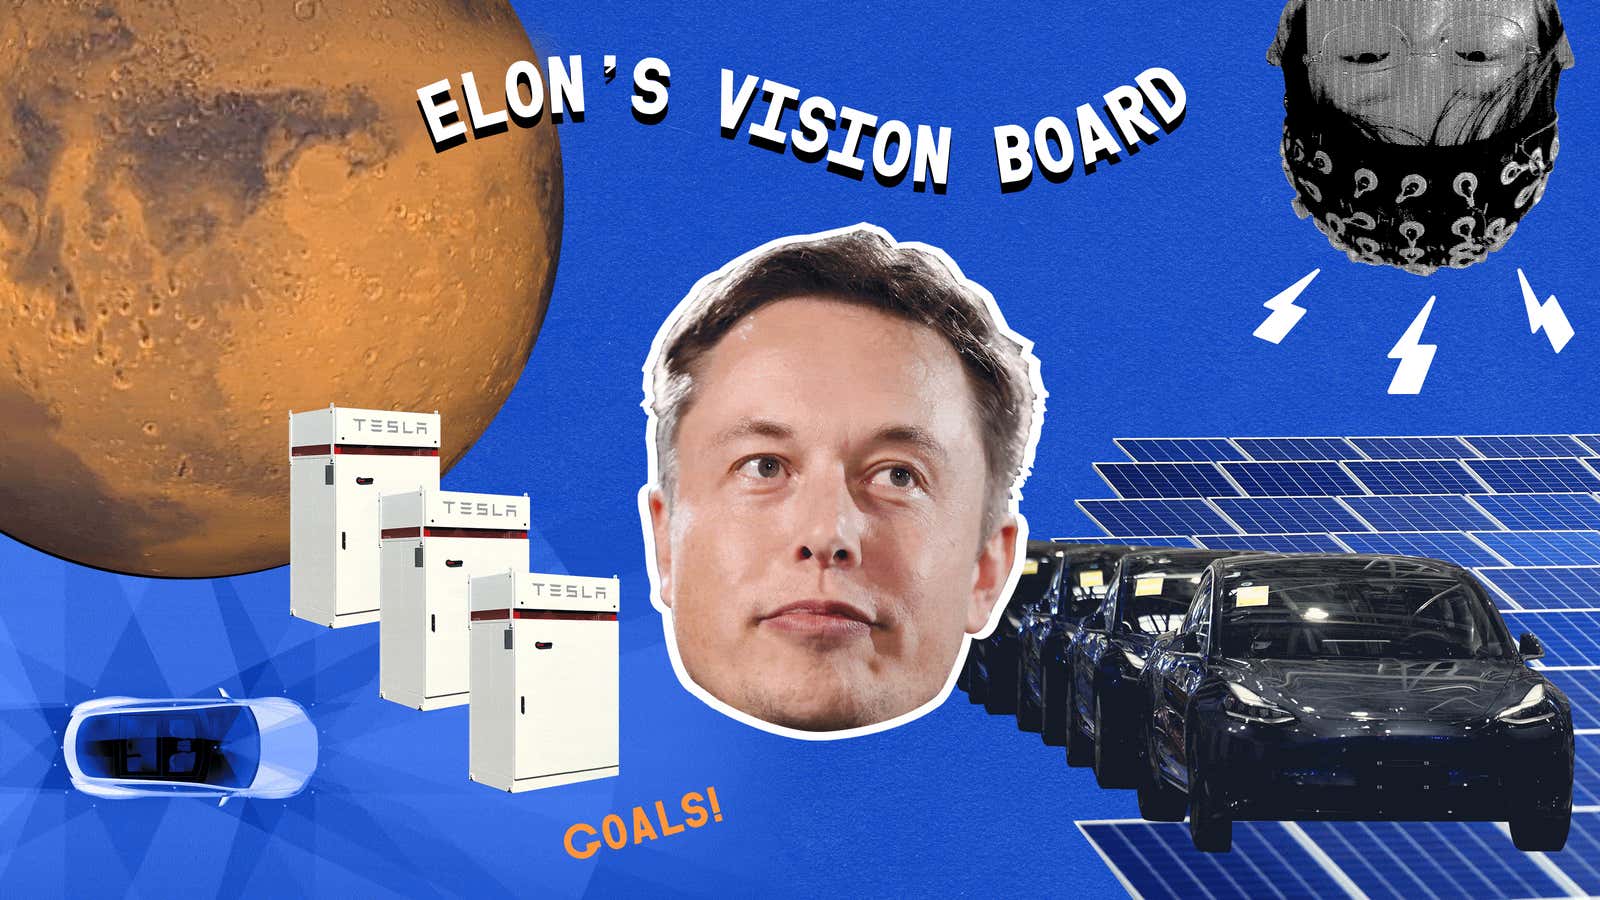 Elon Musk’s vision board for Tesla’s future